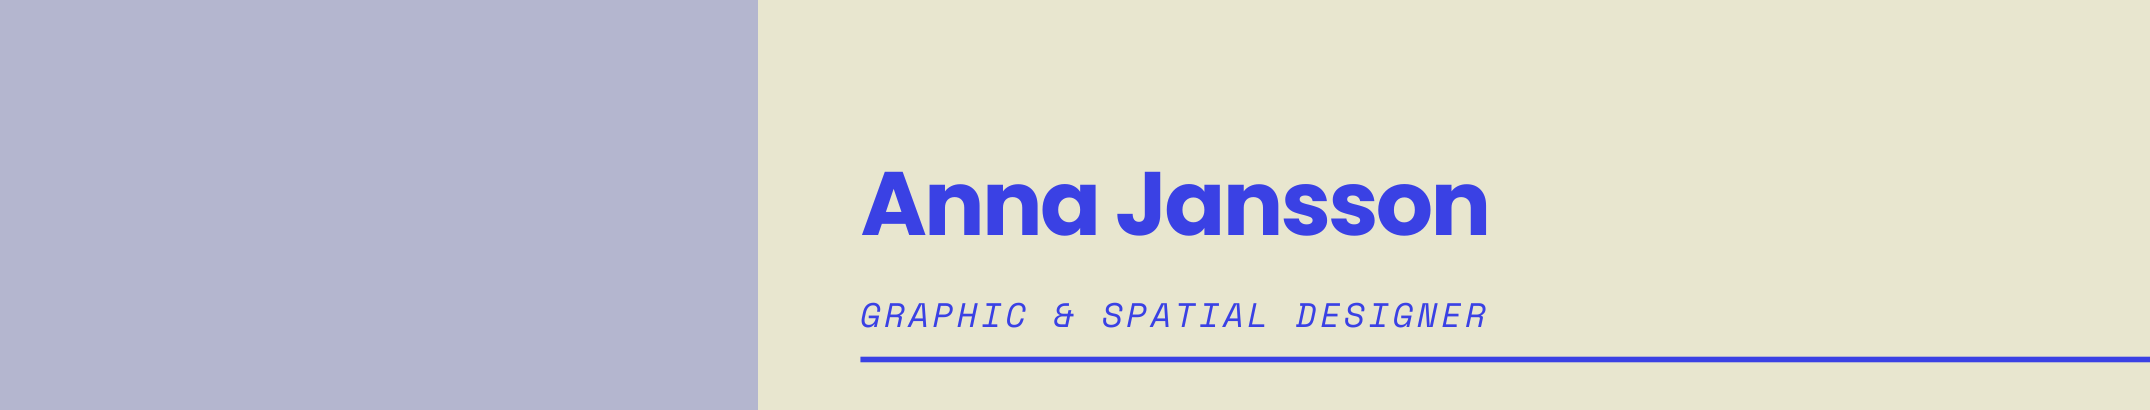 Anna Jansson's profile banner